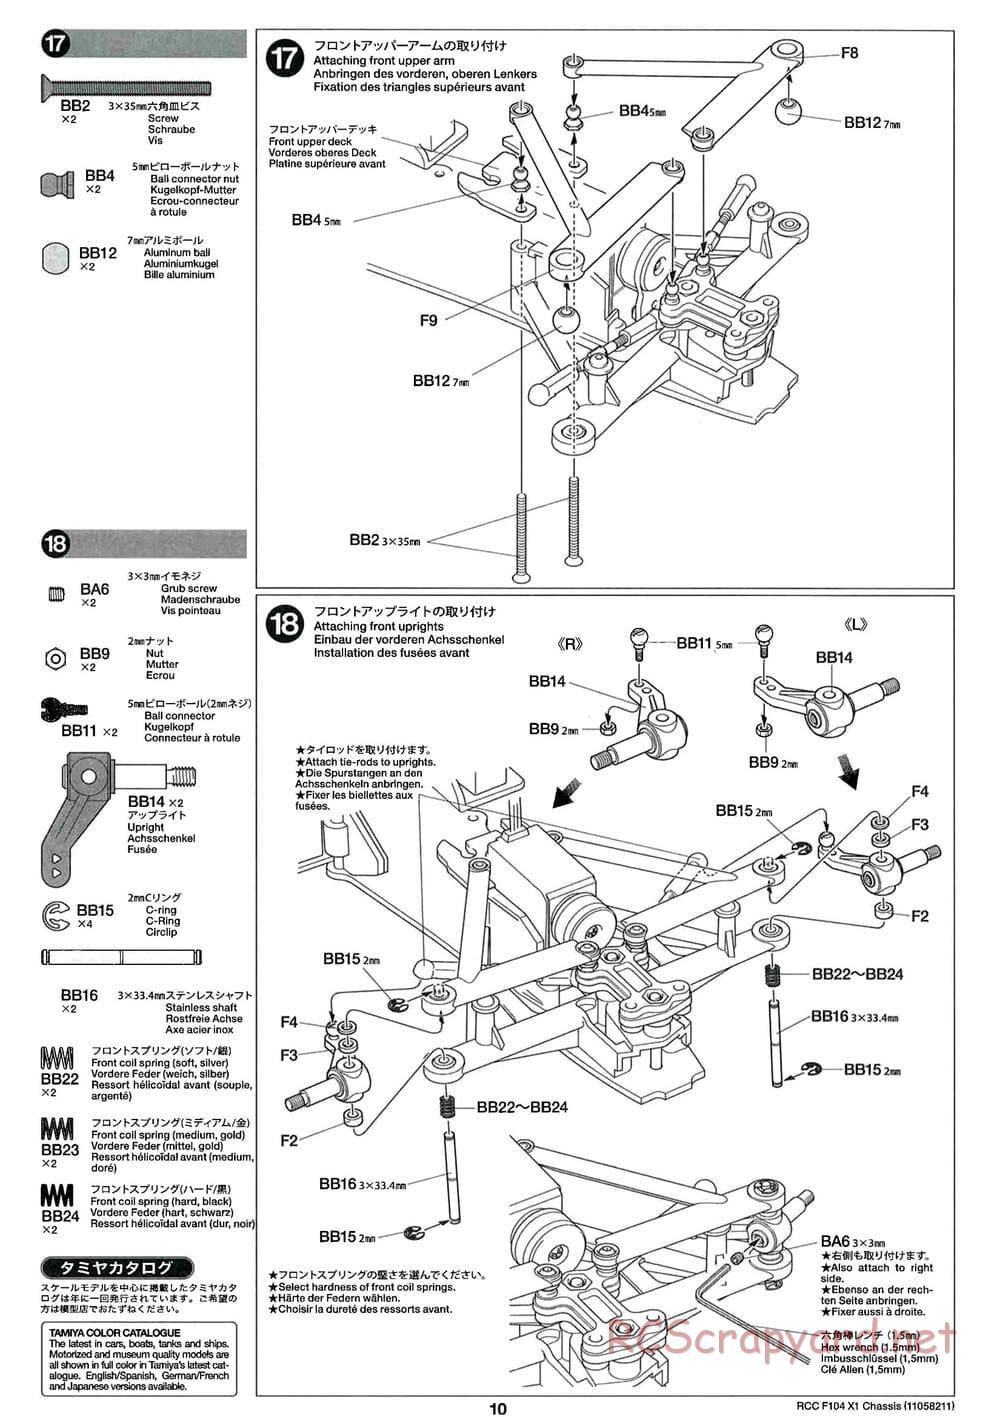 Tamiya - F104X1 Chassis - Manual - Page 10